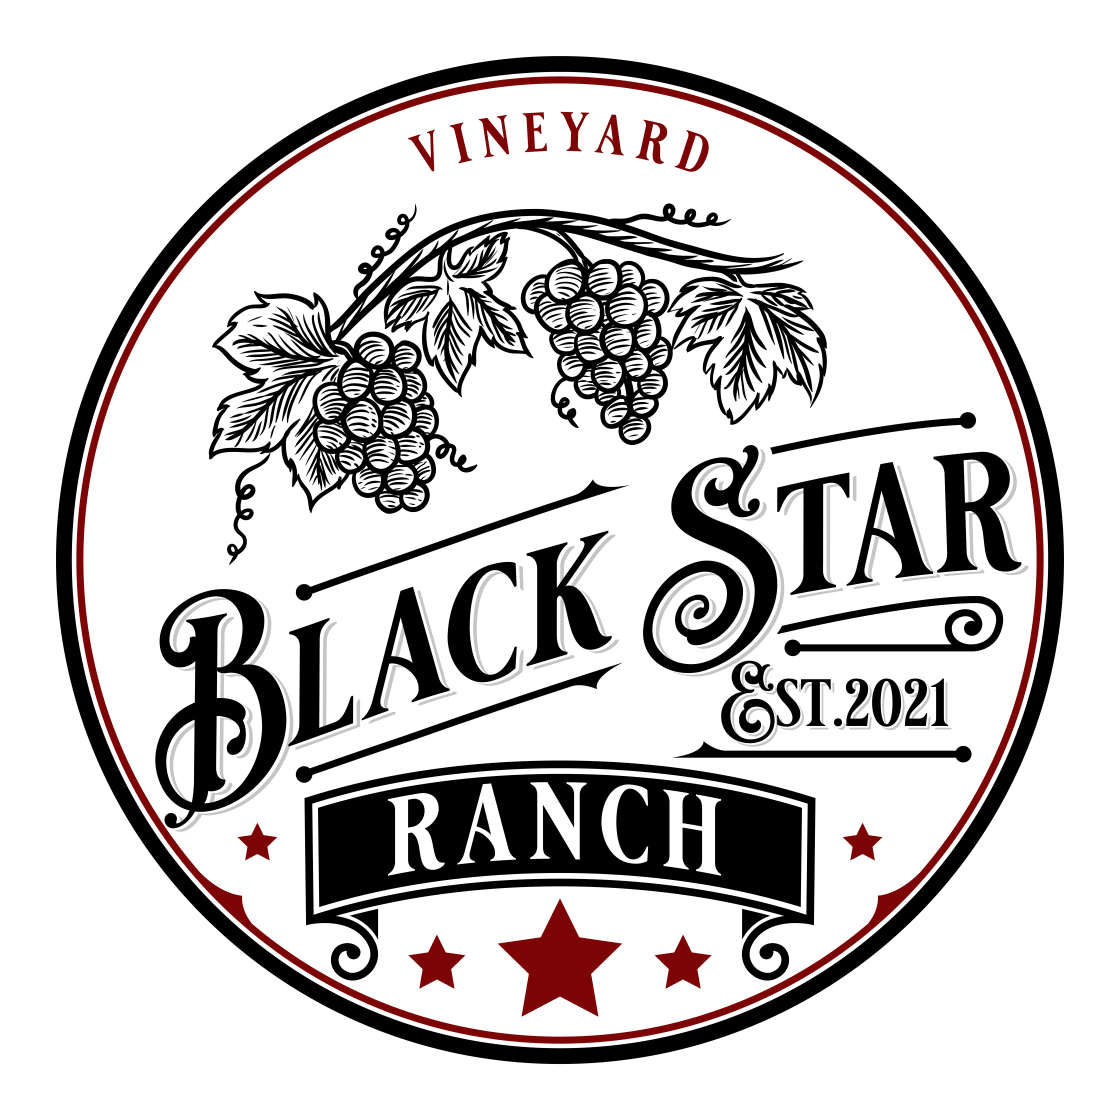 Black Star Ranch Vineyard